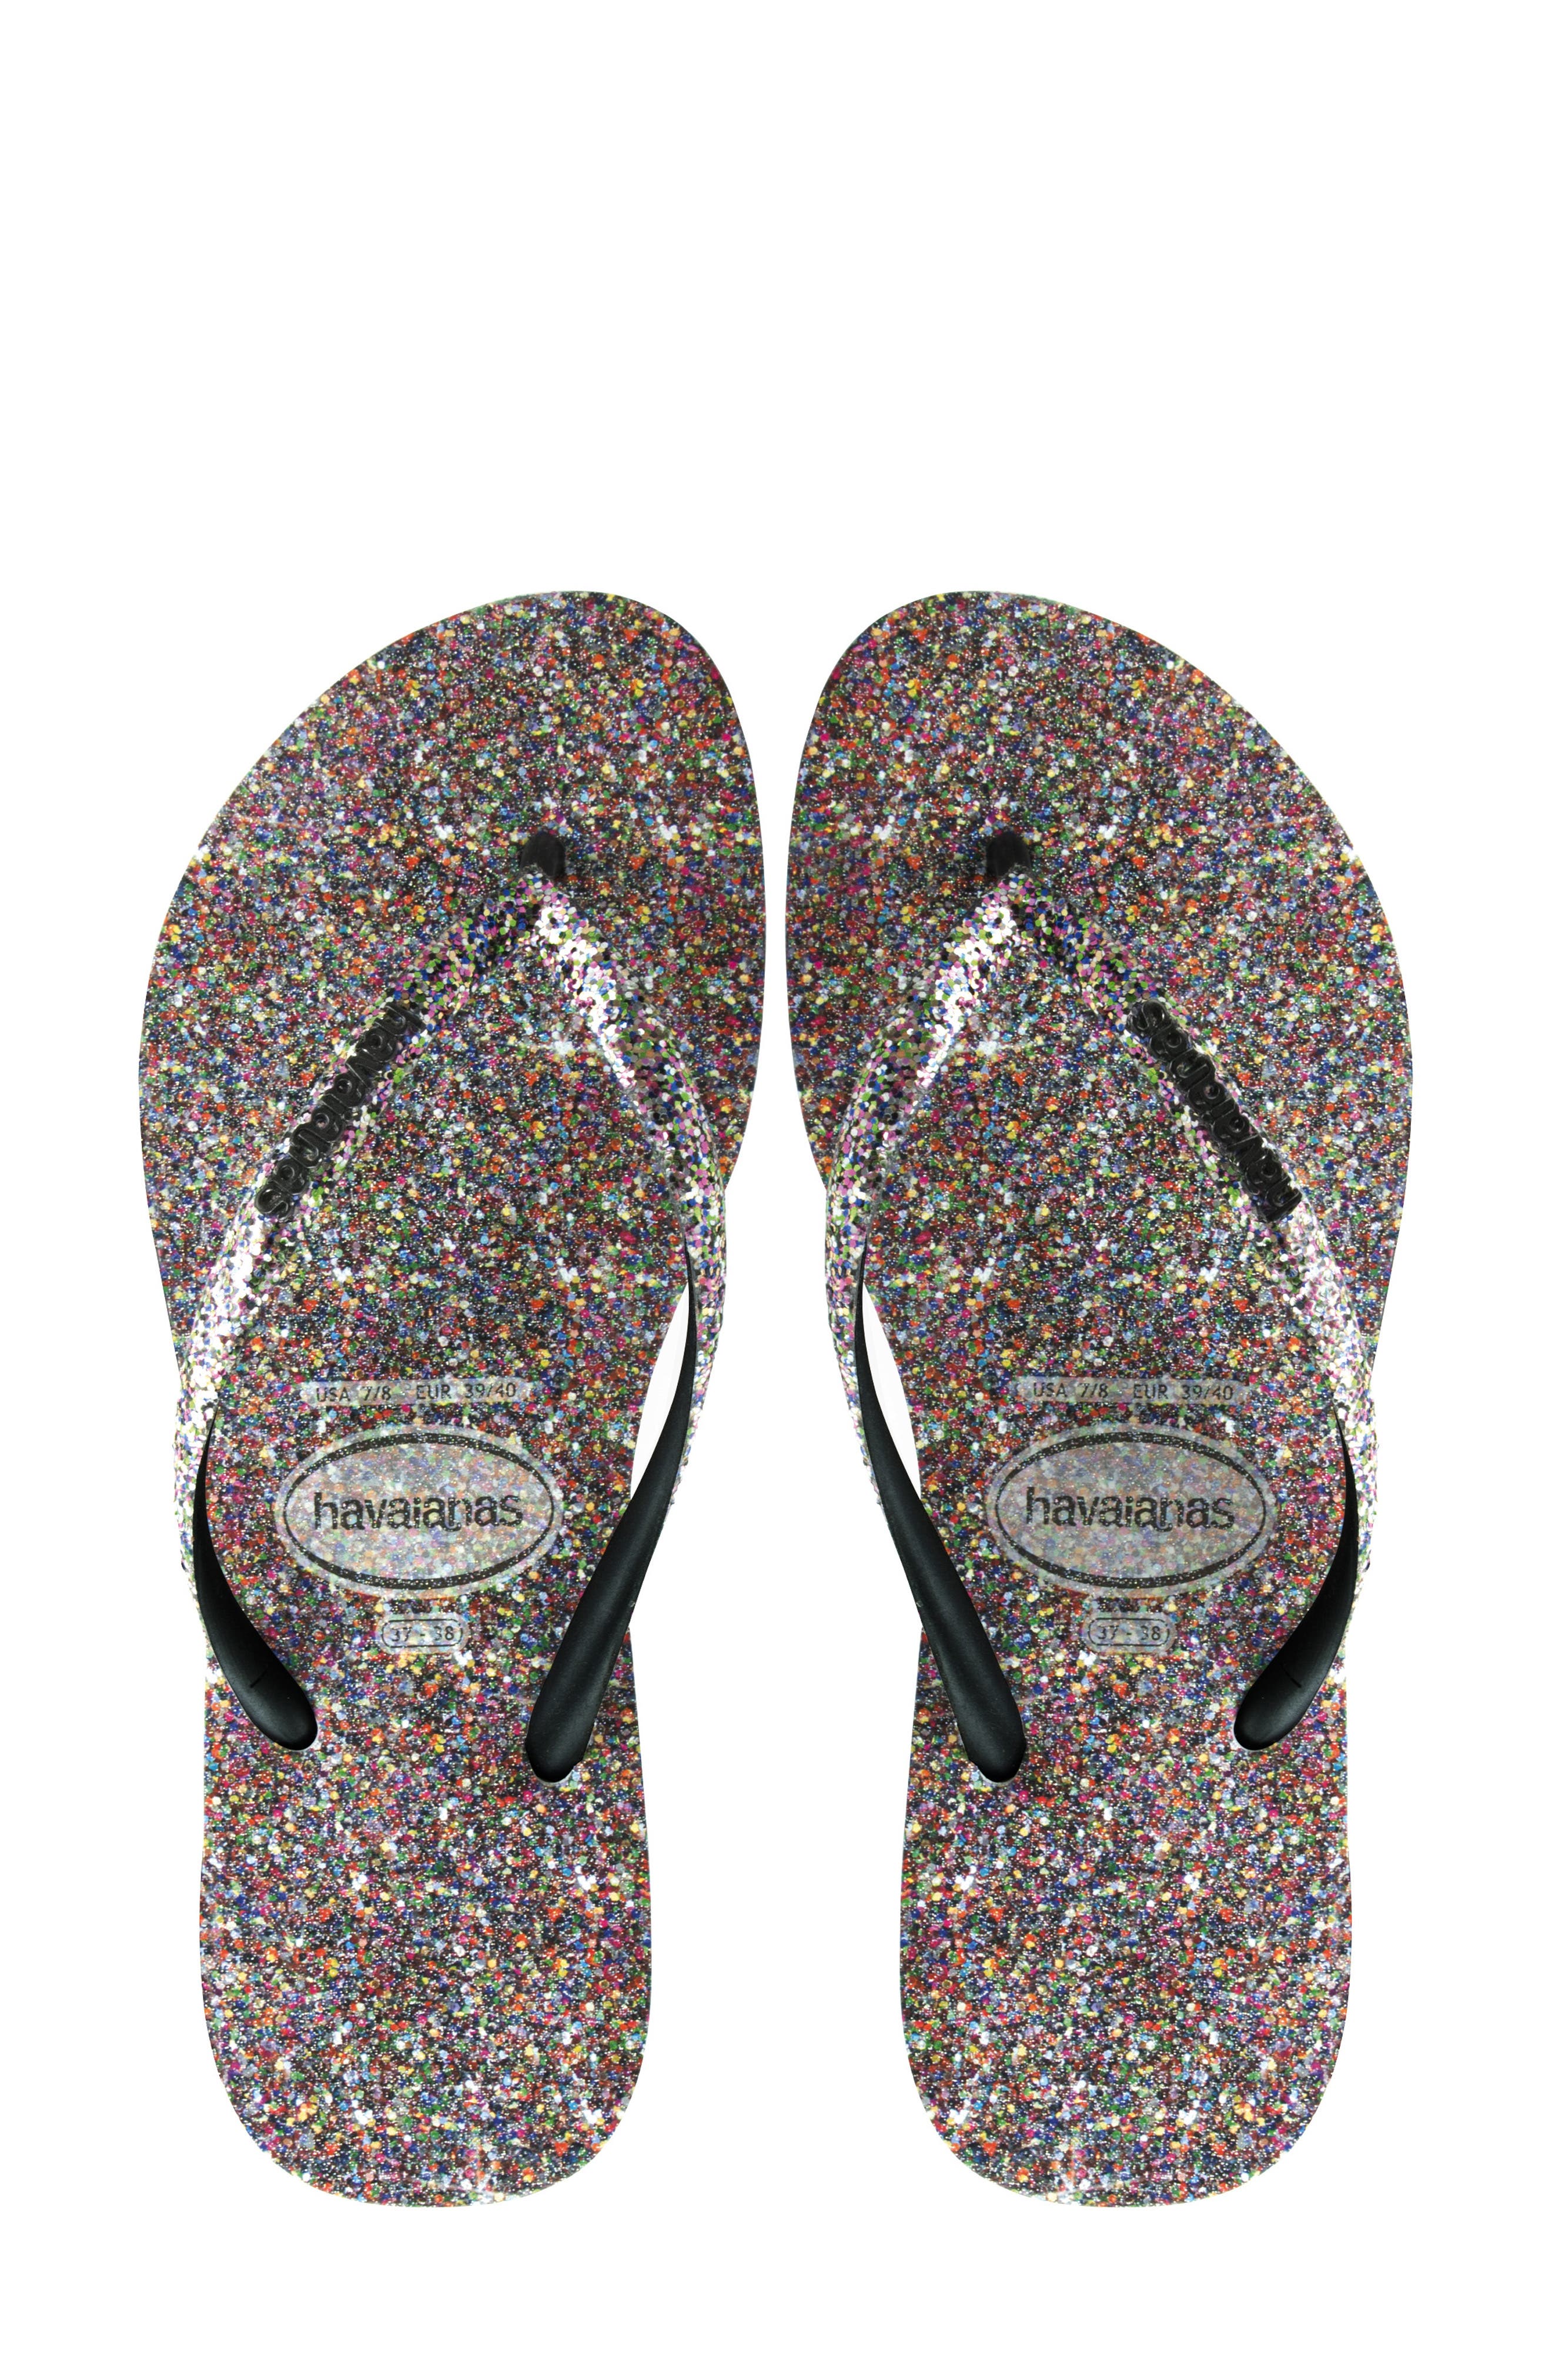 sparkly havaianas flip flops